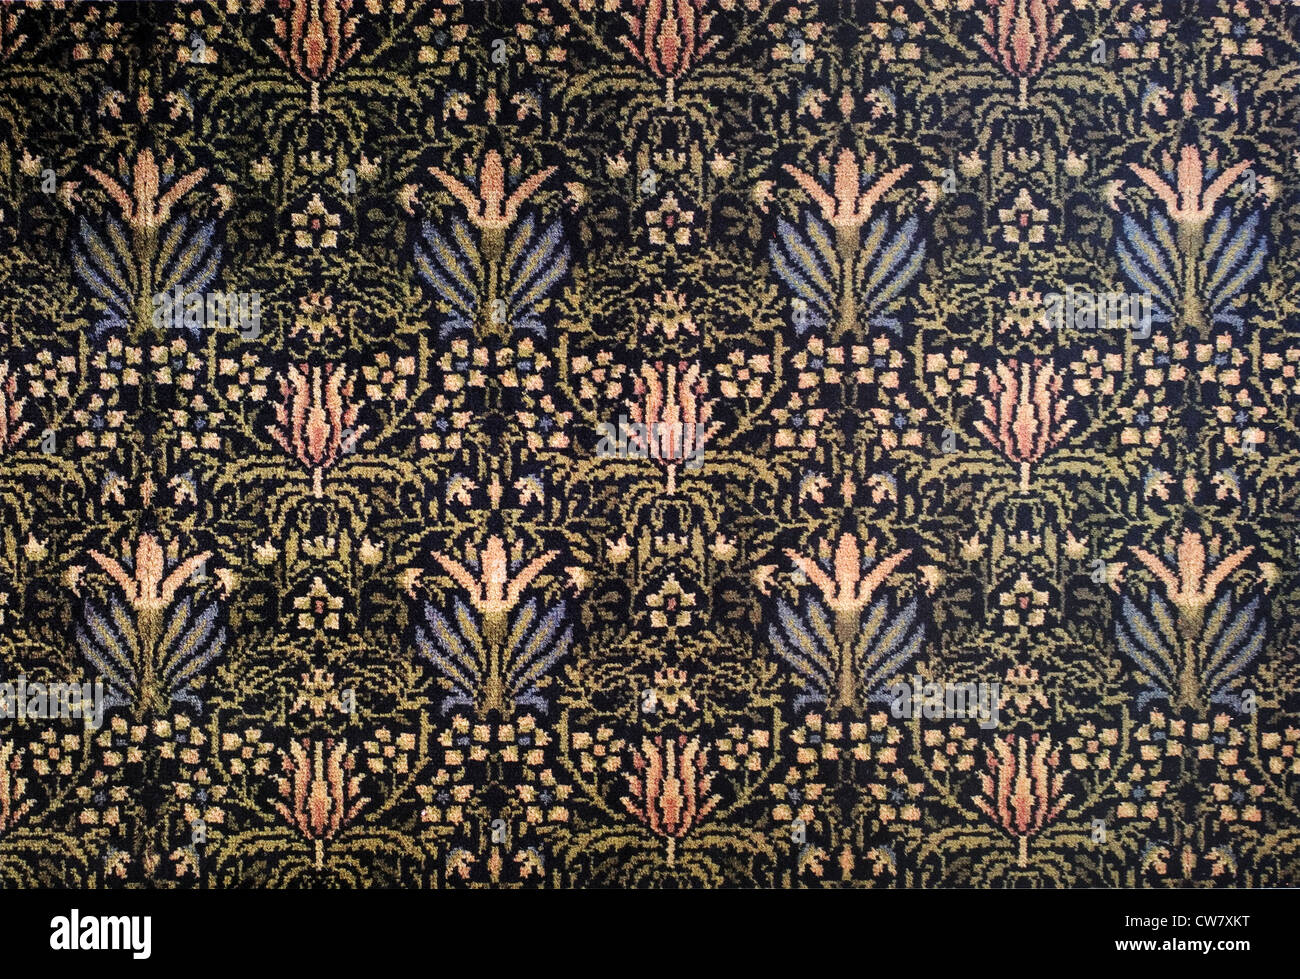 Golden Bough gewebten Textilien Stockfoto